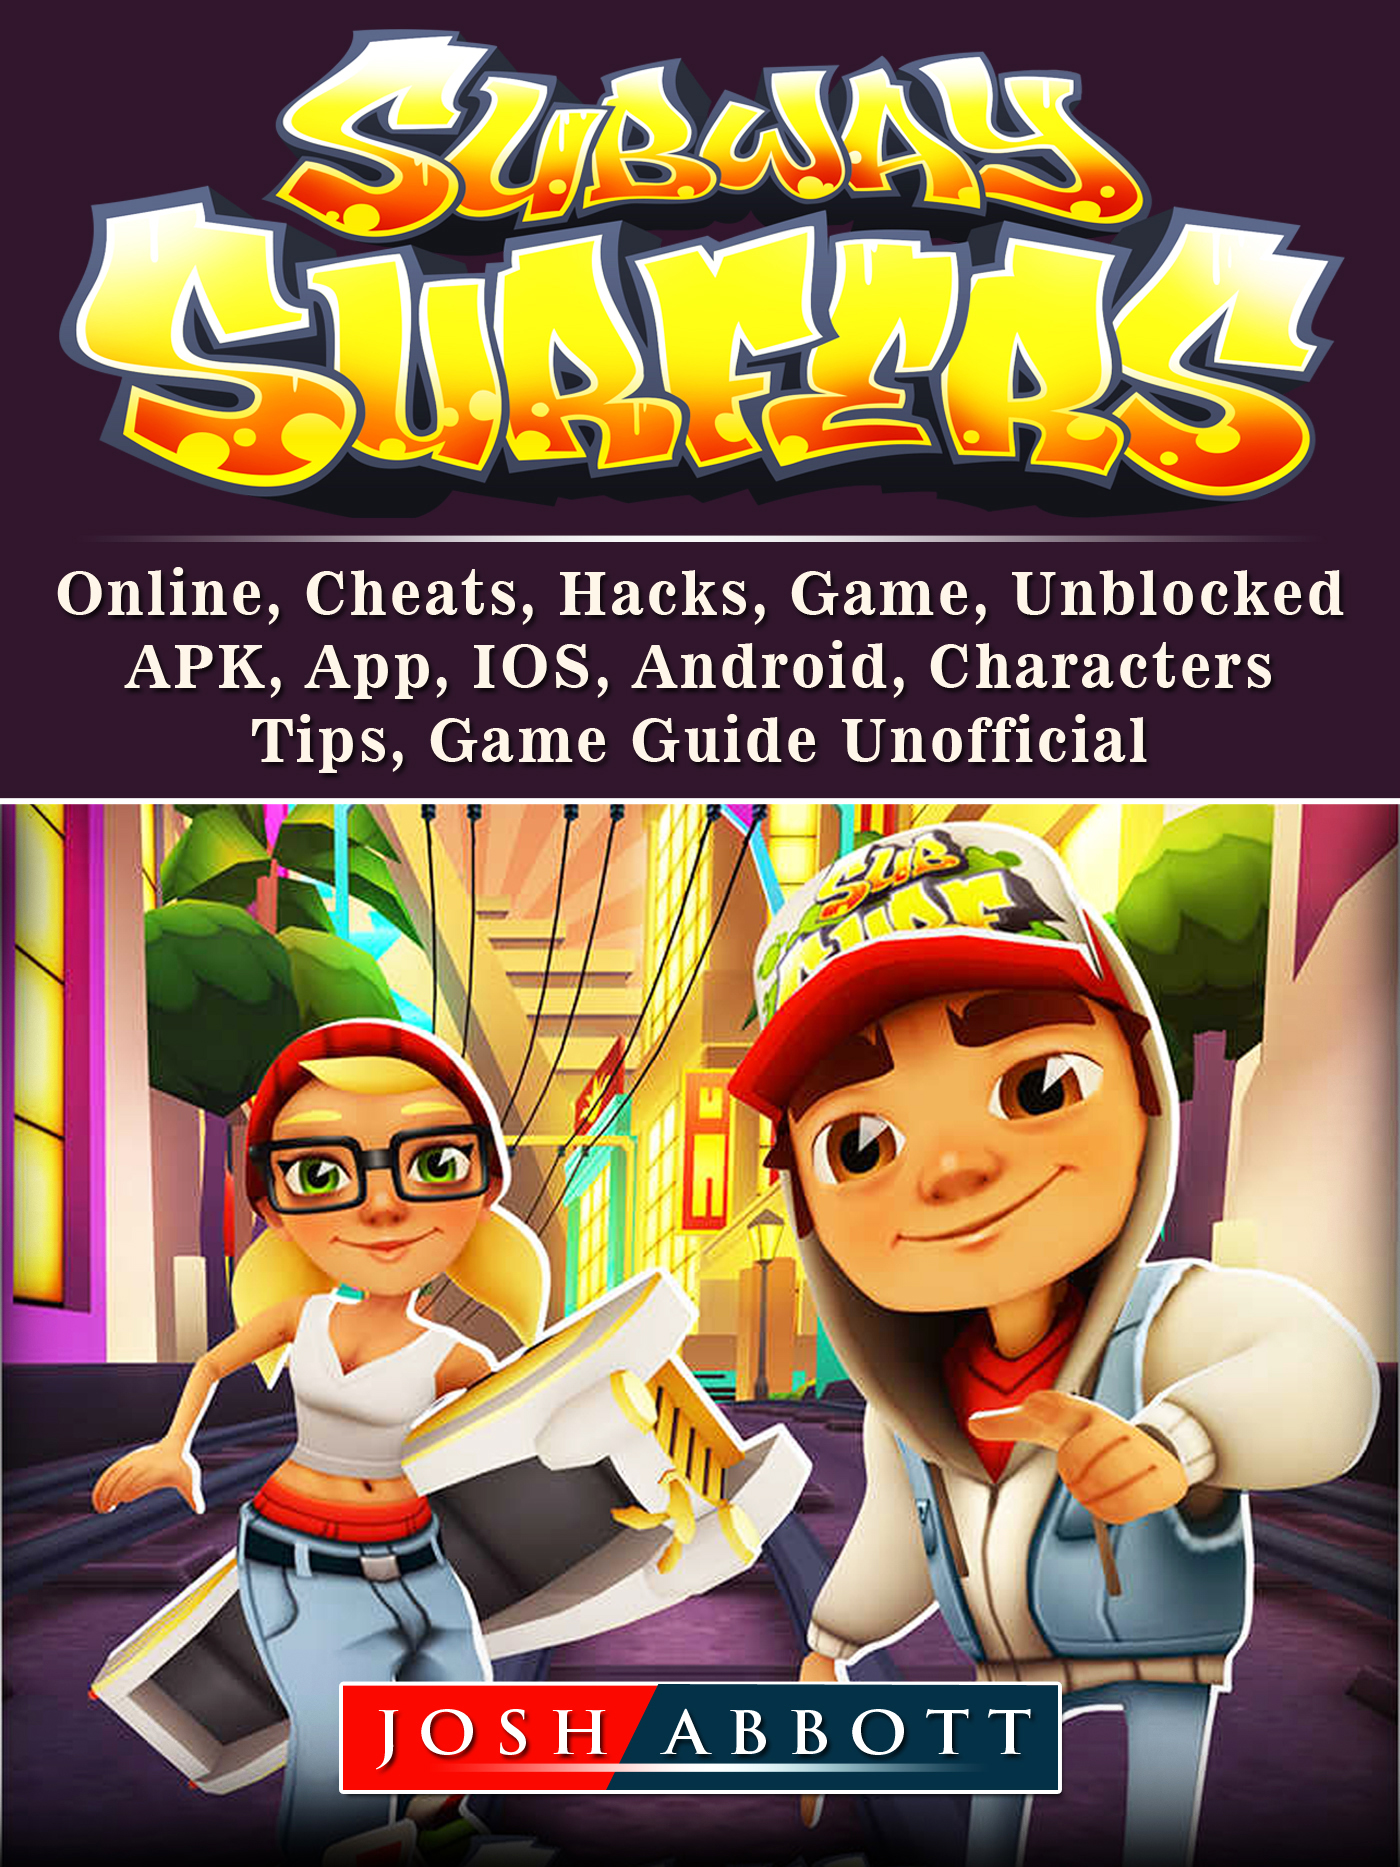 Roblox Unofficial Game Guide Android, iOS, Secrets, Tips, Tricks, Hints  eBook por Hse Games - EPUB Libro